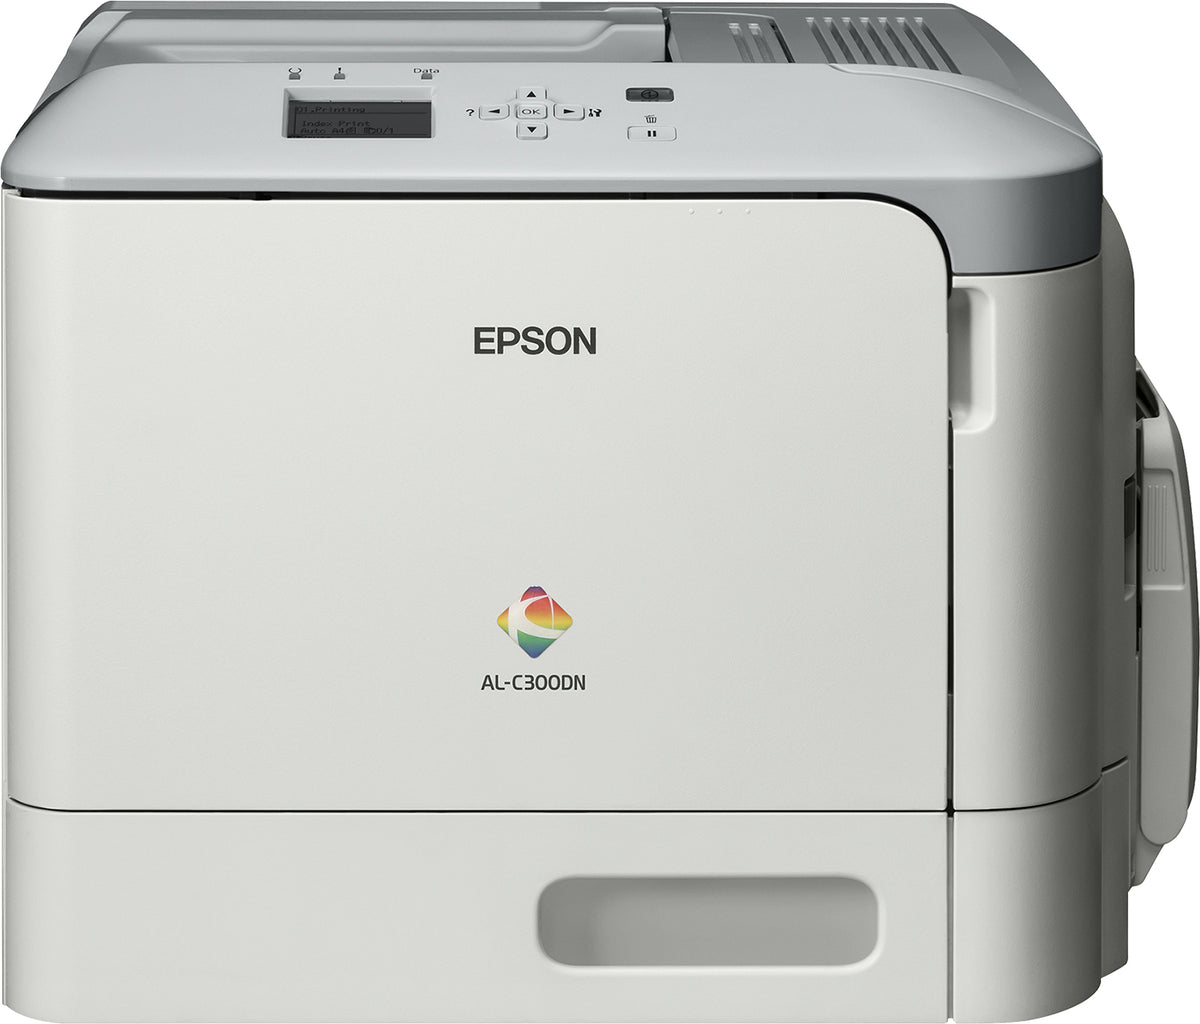 Epson AL-C300DN - Impresora - color - Dúplex - láser - A4/Legal - 1200 x 1200 ppp - hasta 31 ppm (mono) / hasta 31 ppm (color) - capacidad: 350 hojas - USB 2.0, Gigabit LAN, USB anfitrión